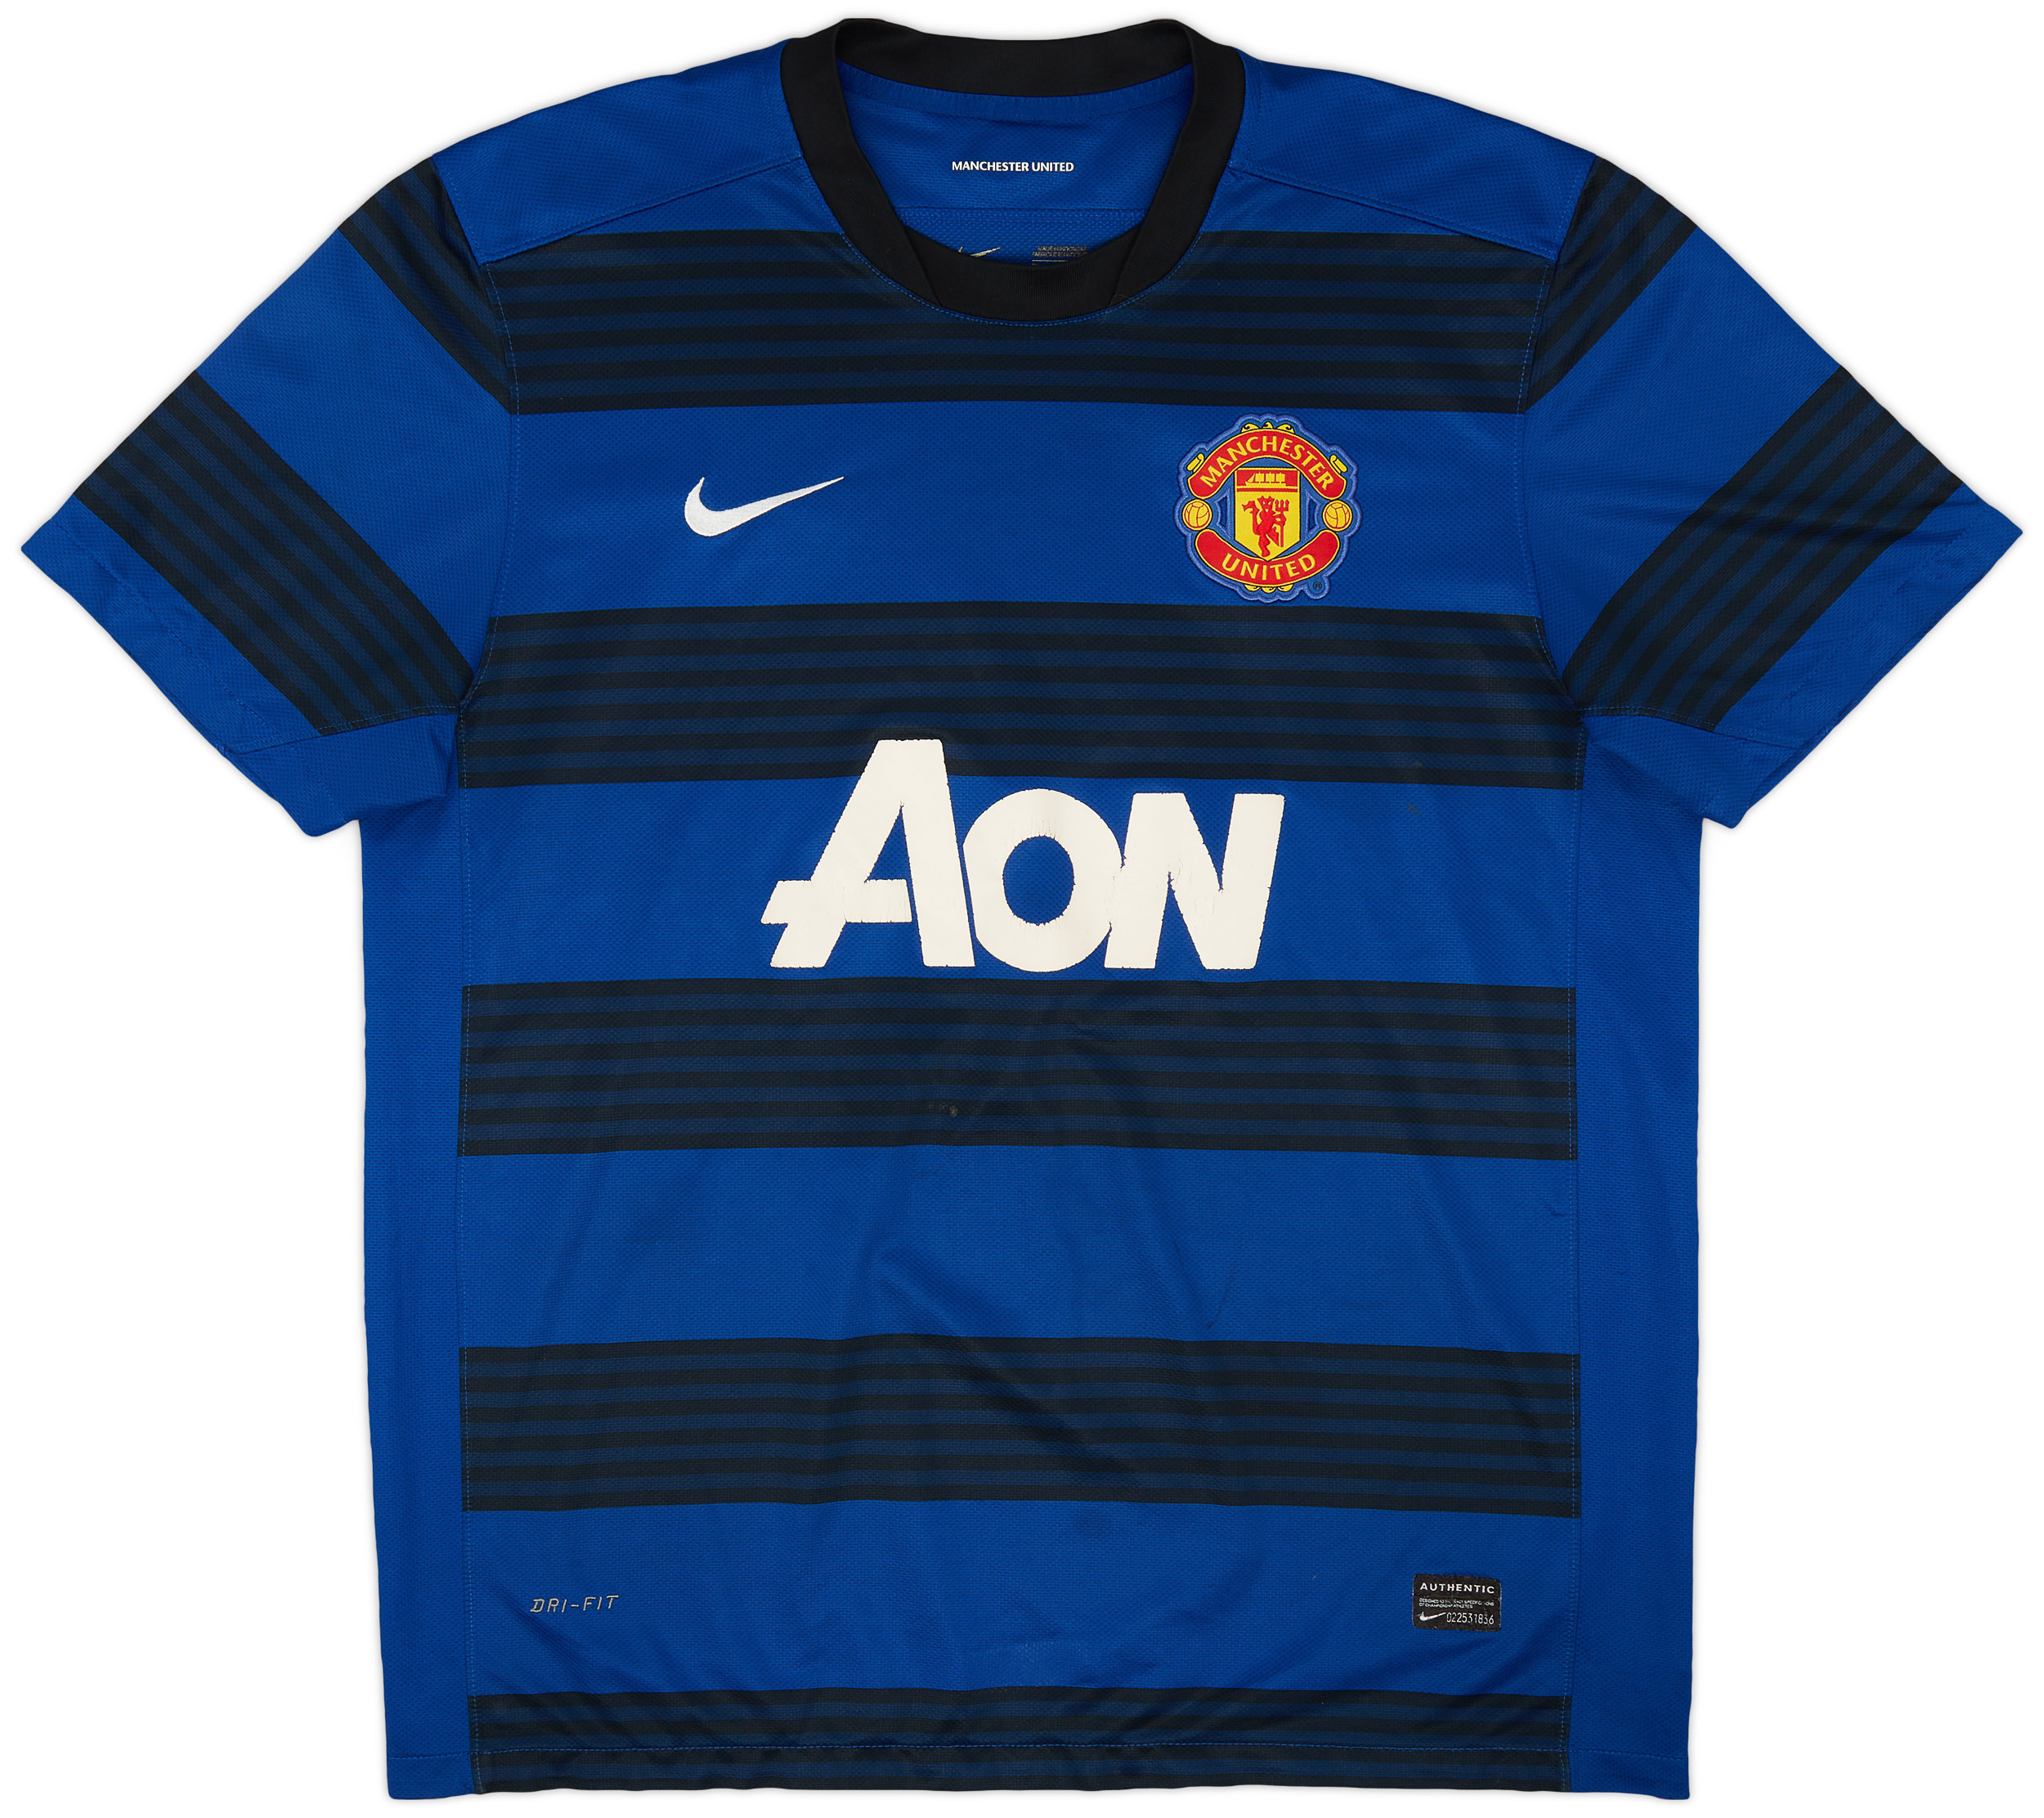 2011-13 Manchester United Away Shirt - 5/10 - ()